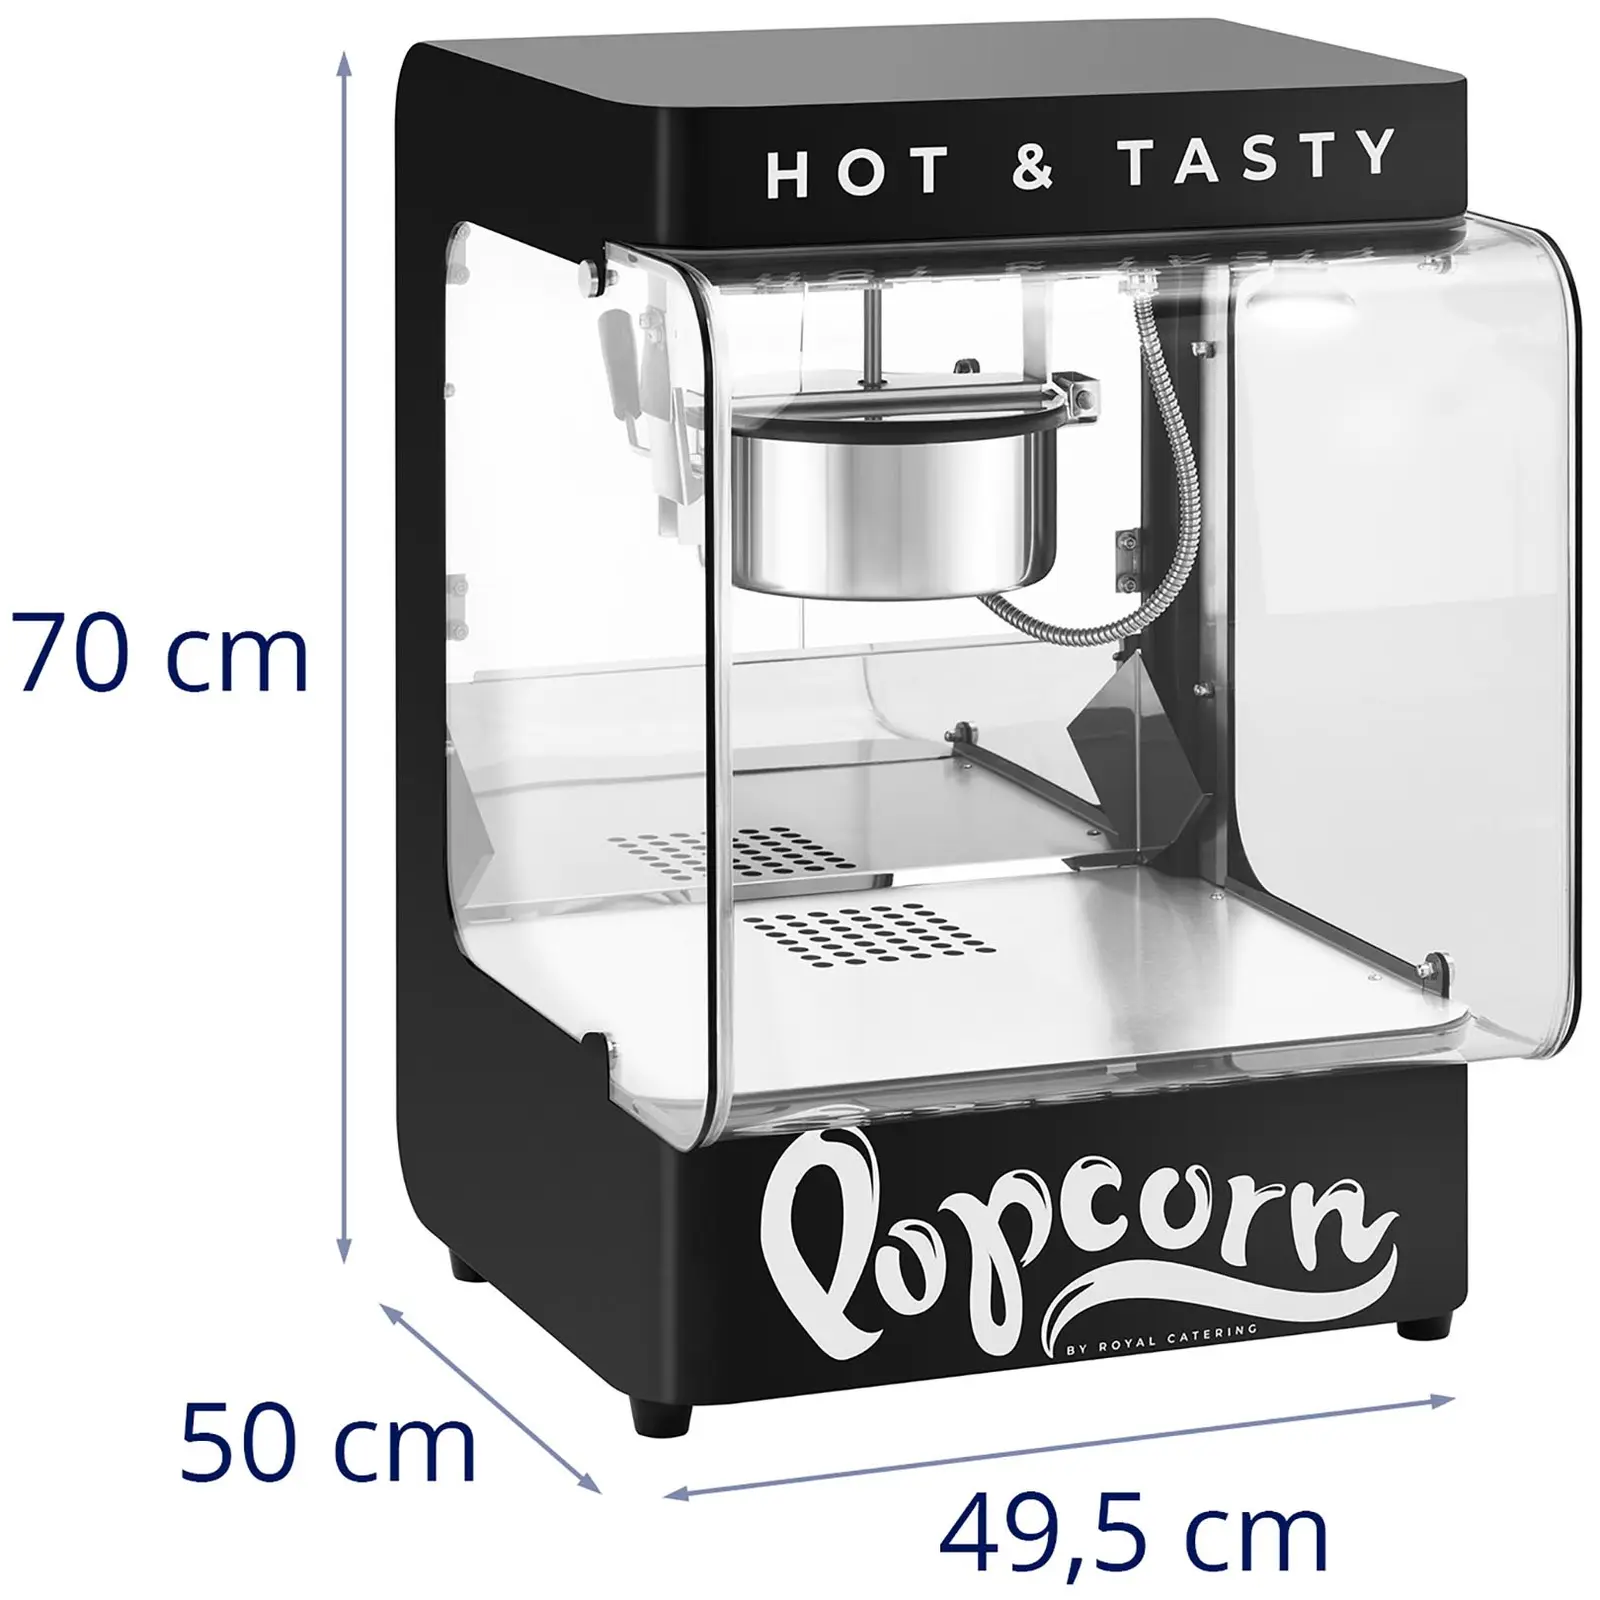 Andrahandssortering Professionell popcornmaskin - Modern design - 4 - 5 kg/h - 1,2 l - Svart - Royal Catering